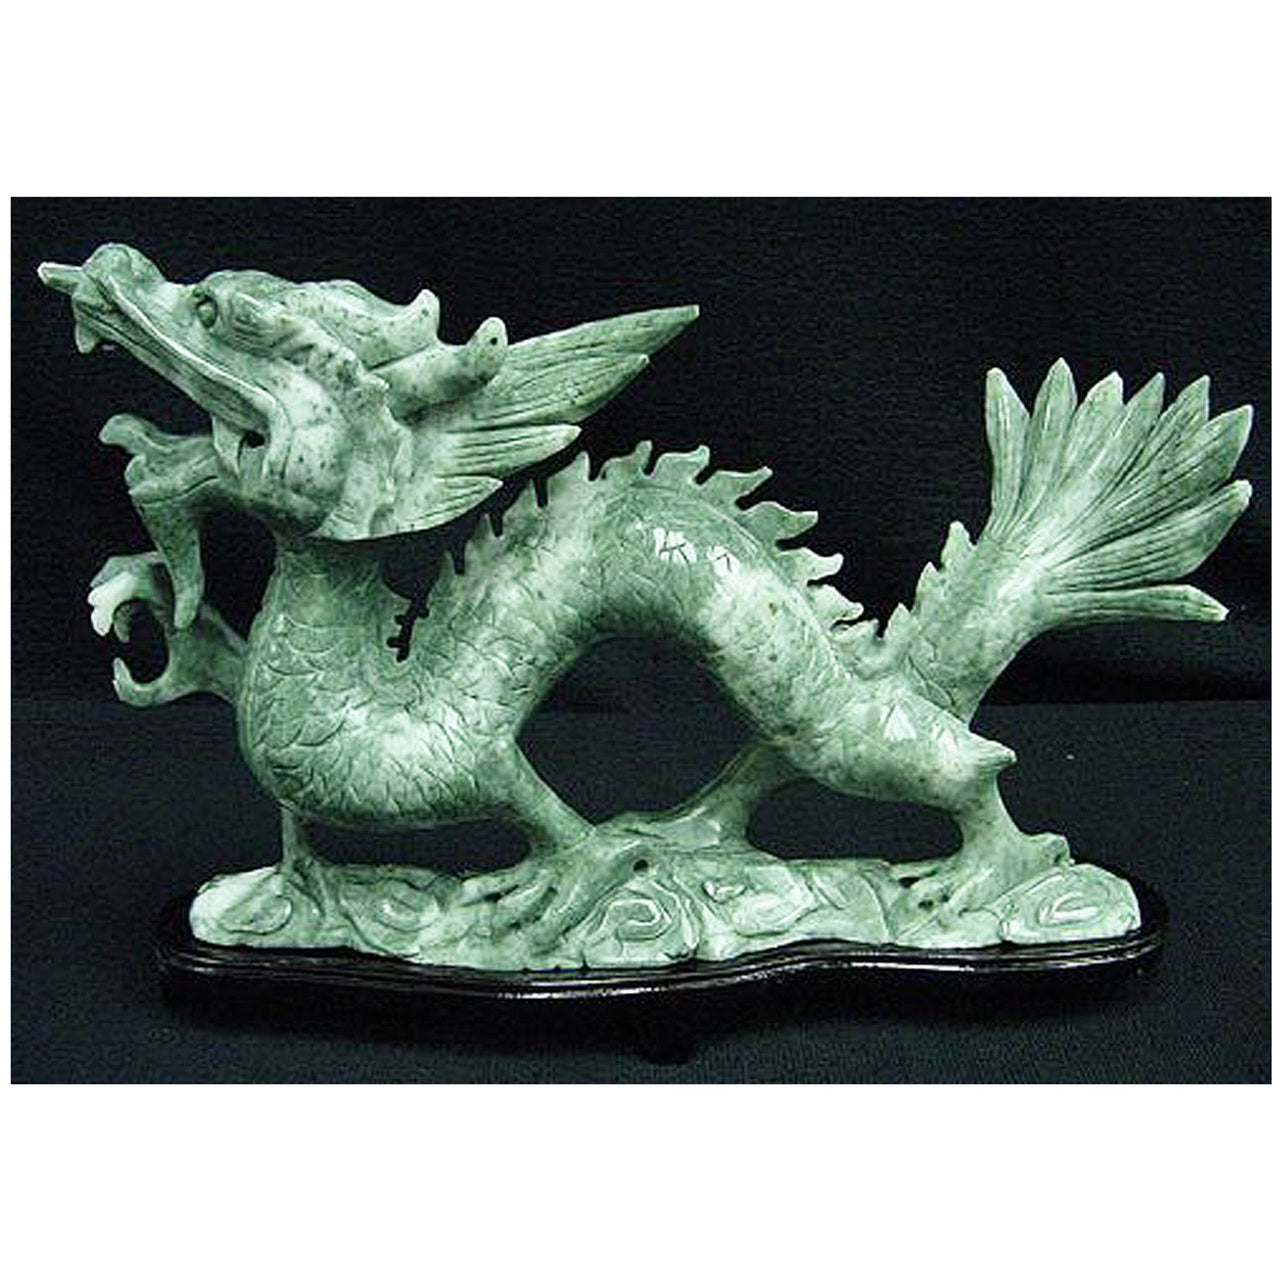 Jade Fierce Dragon Statue Hand Carved Stone Sculpture